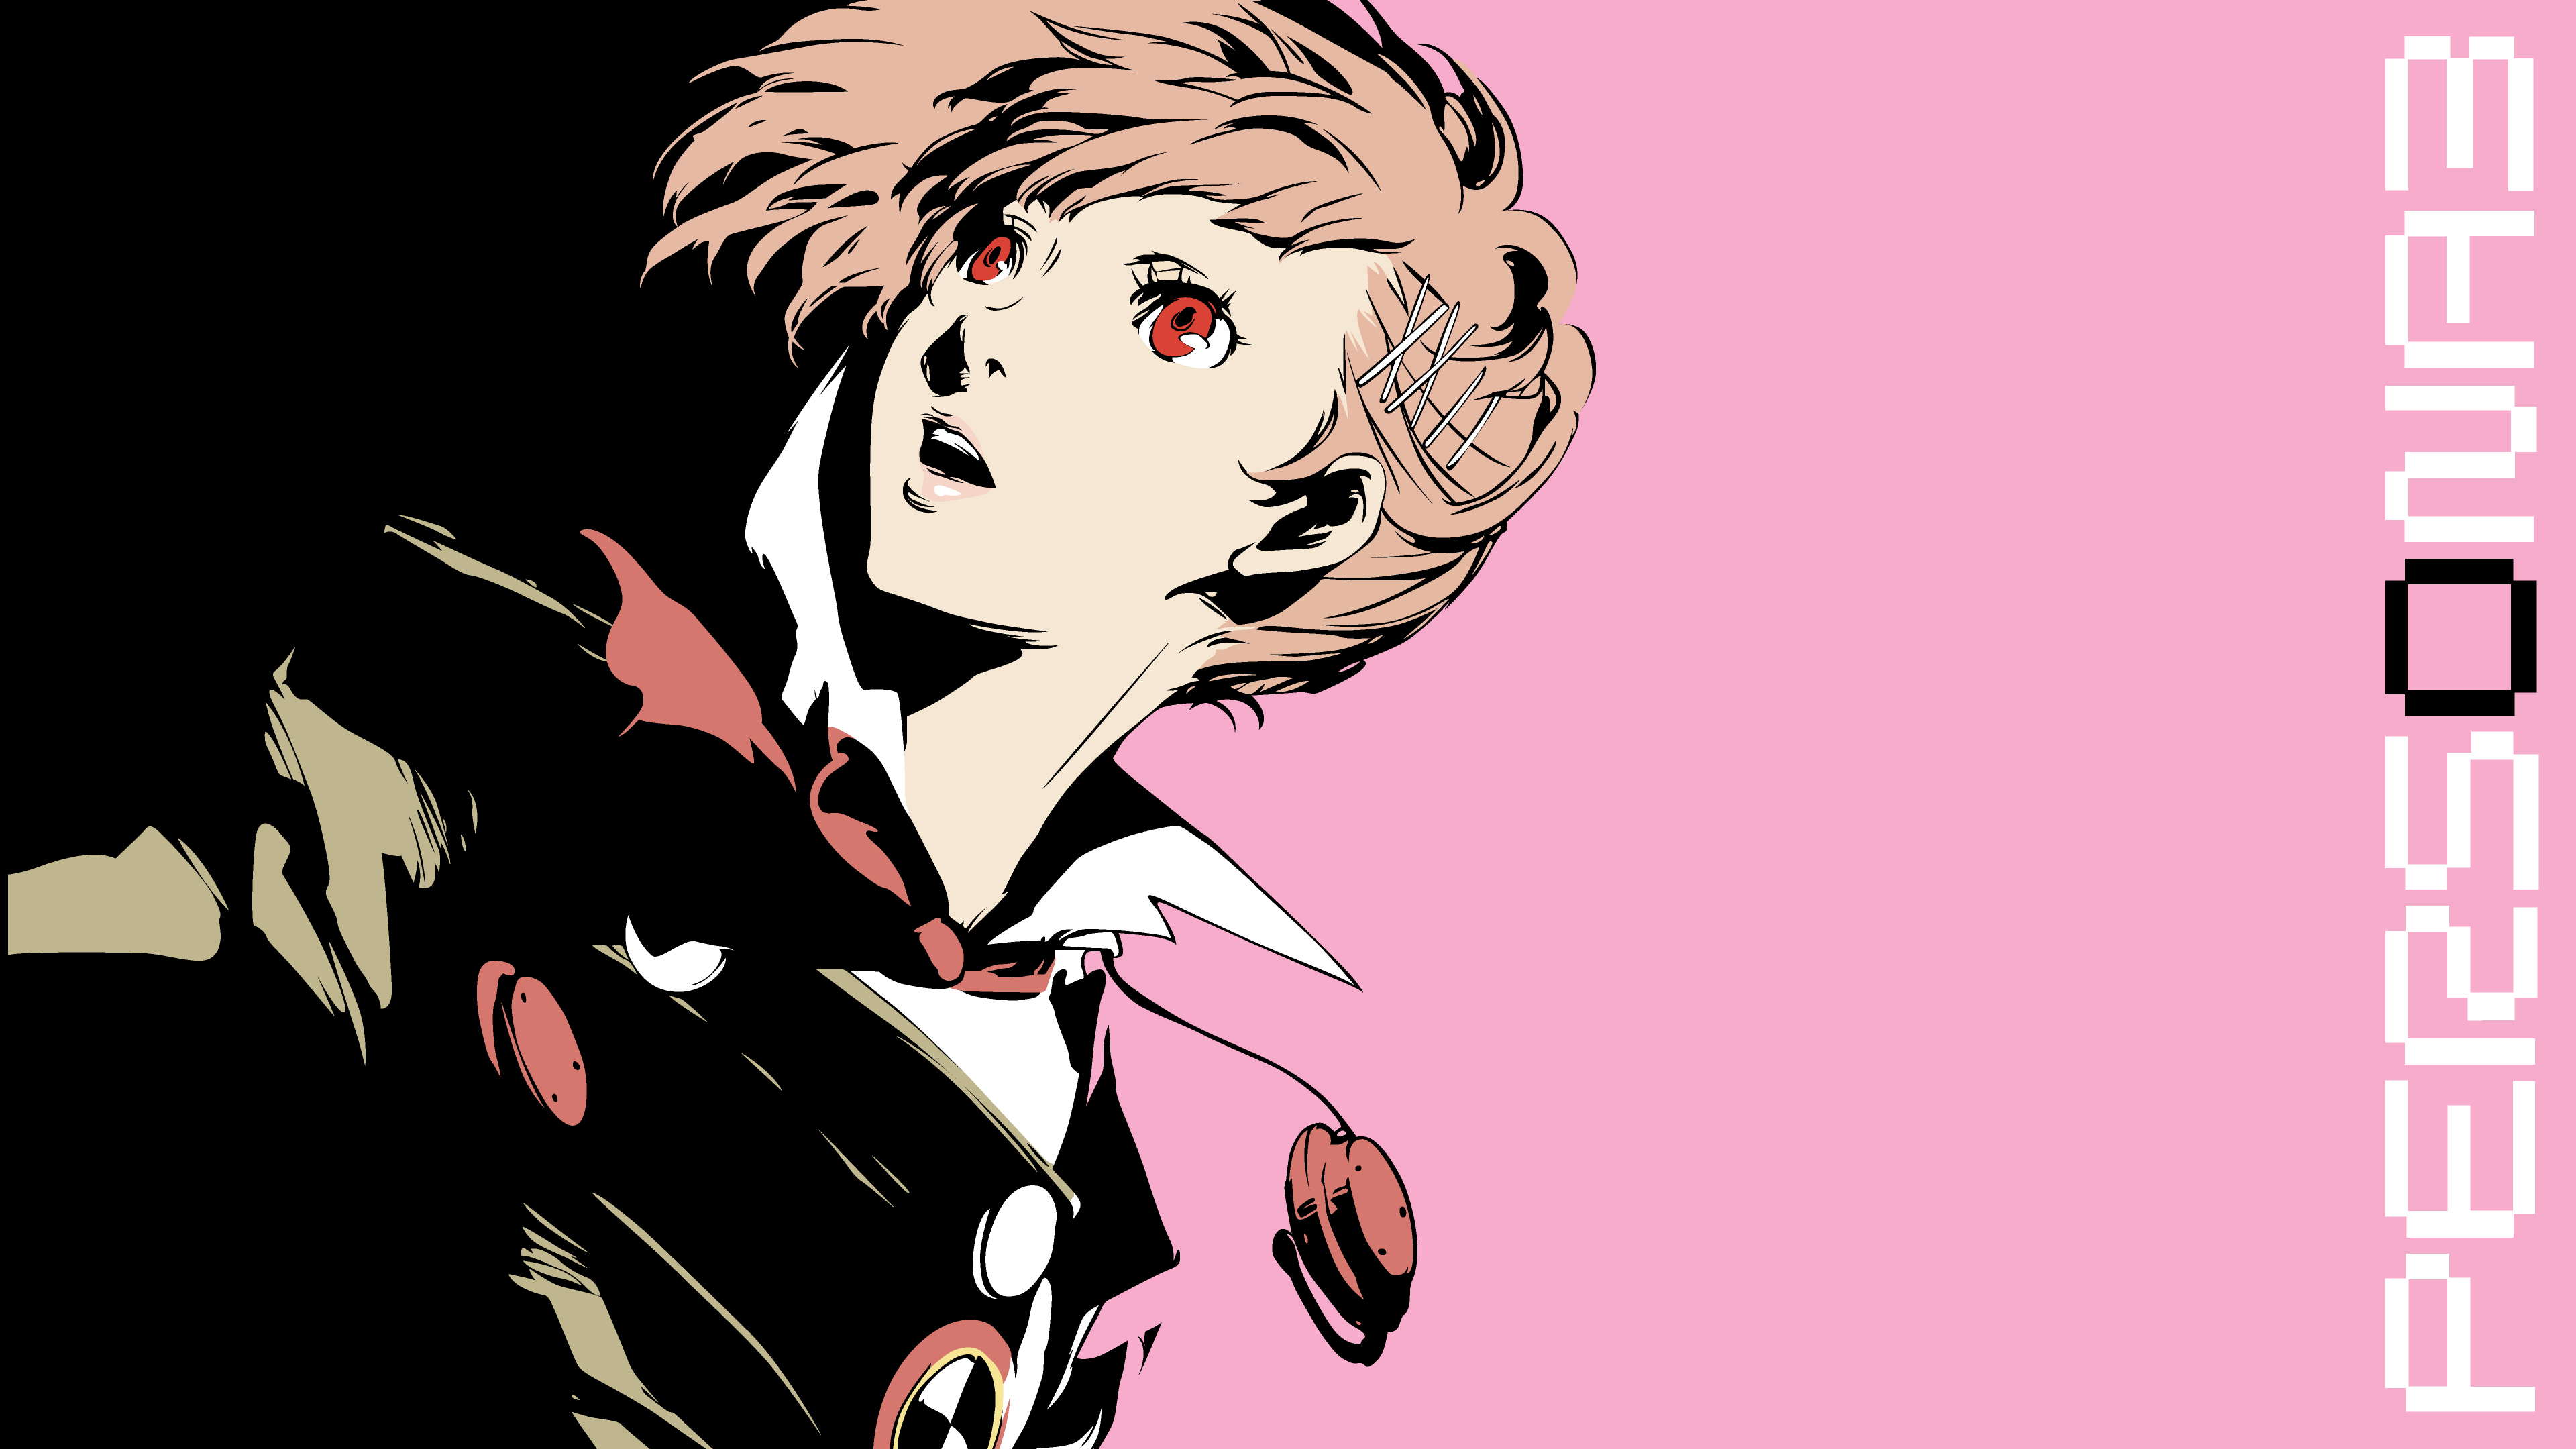 Persona 6 female protagonist